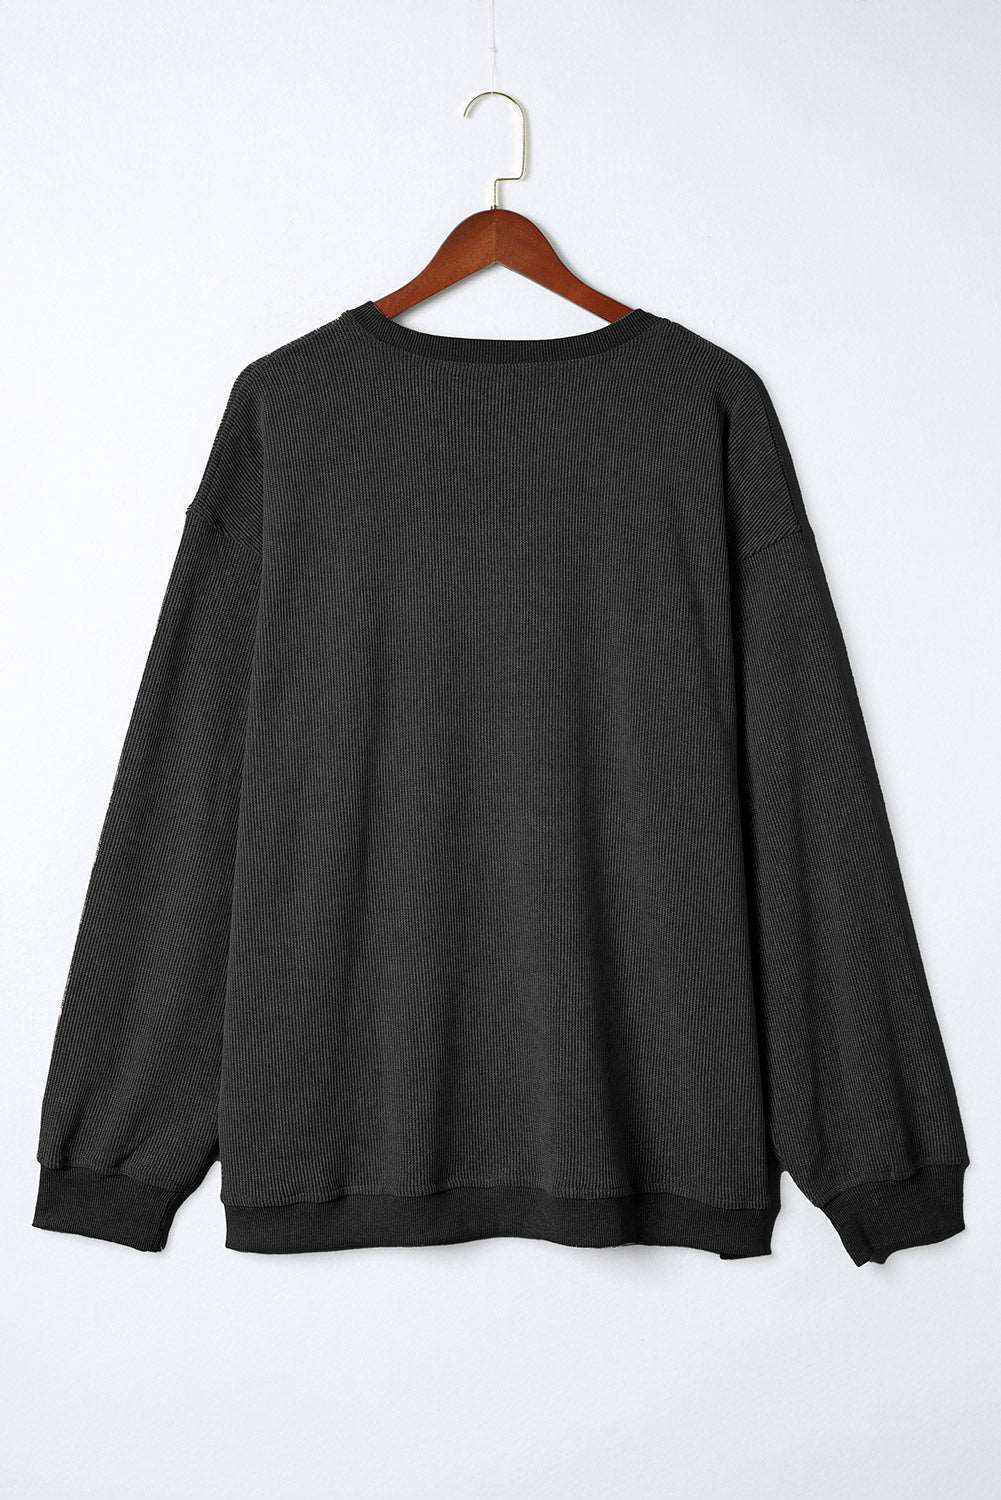 Black Plus Size Corded Round Neck Sweatshirt - Bellisima Clothing Collective